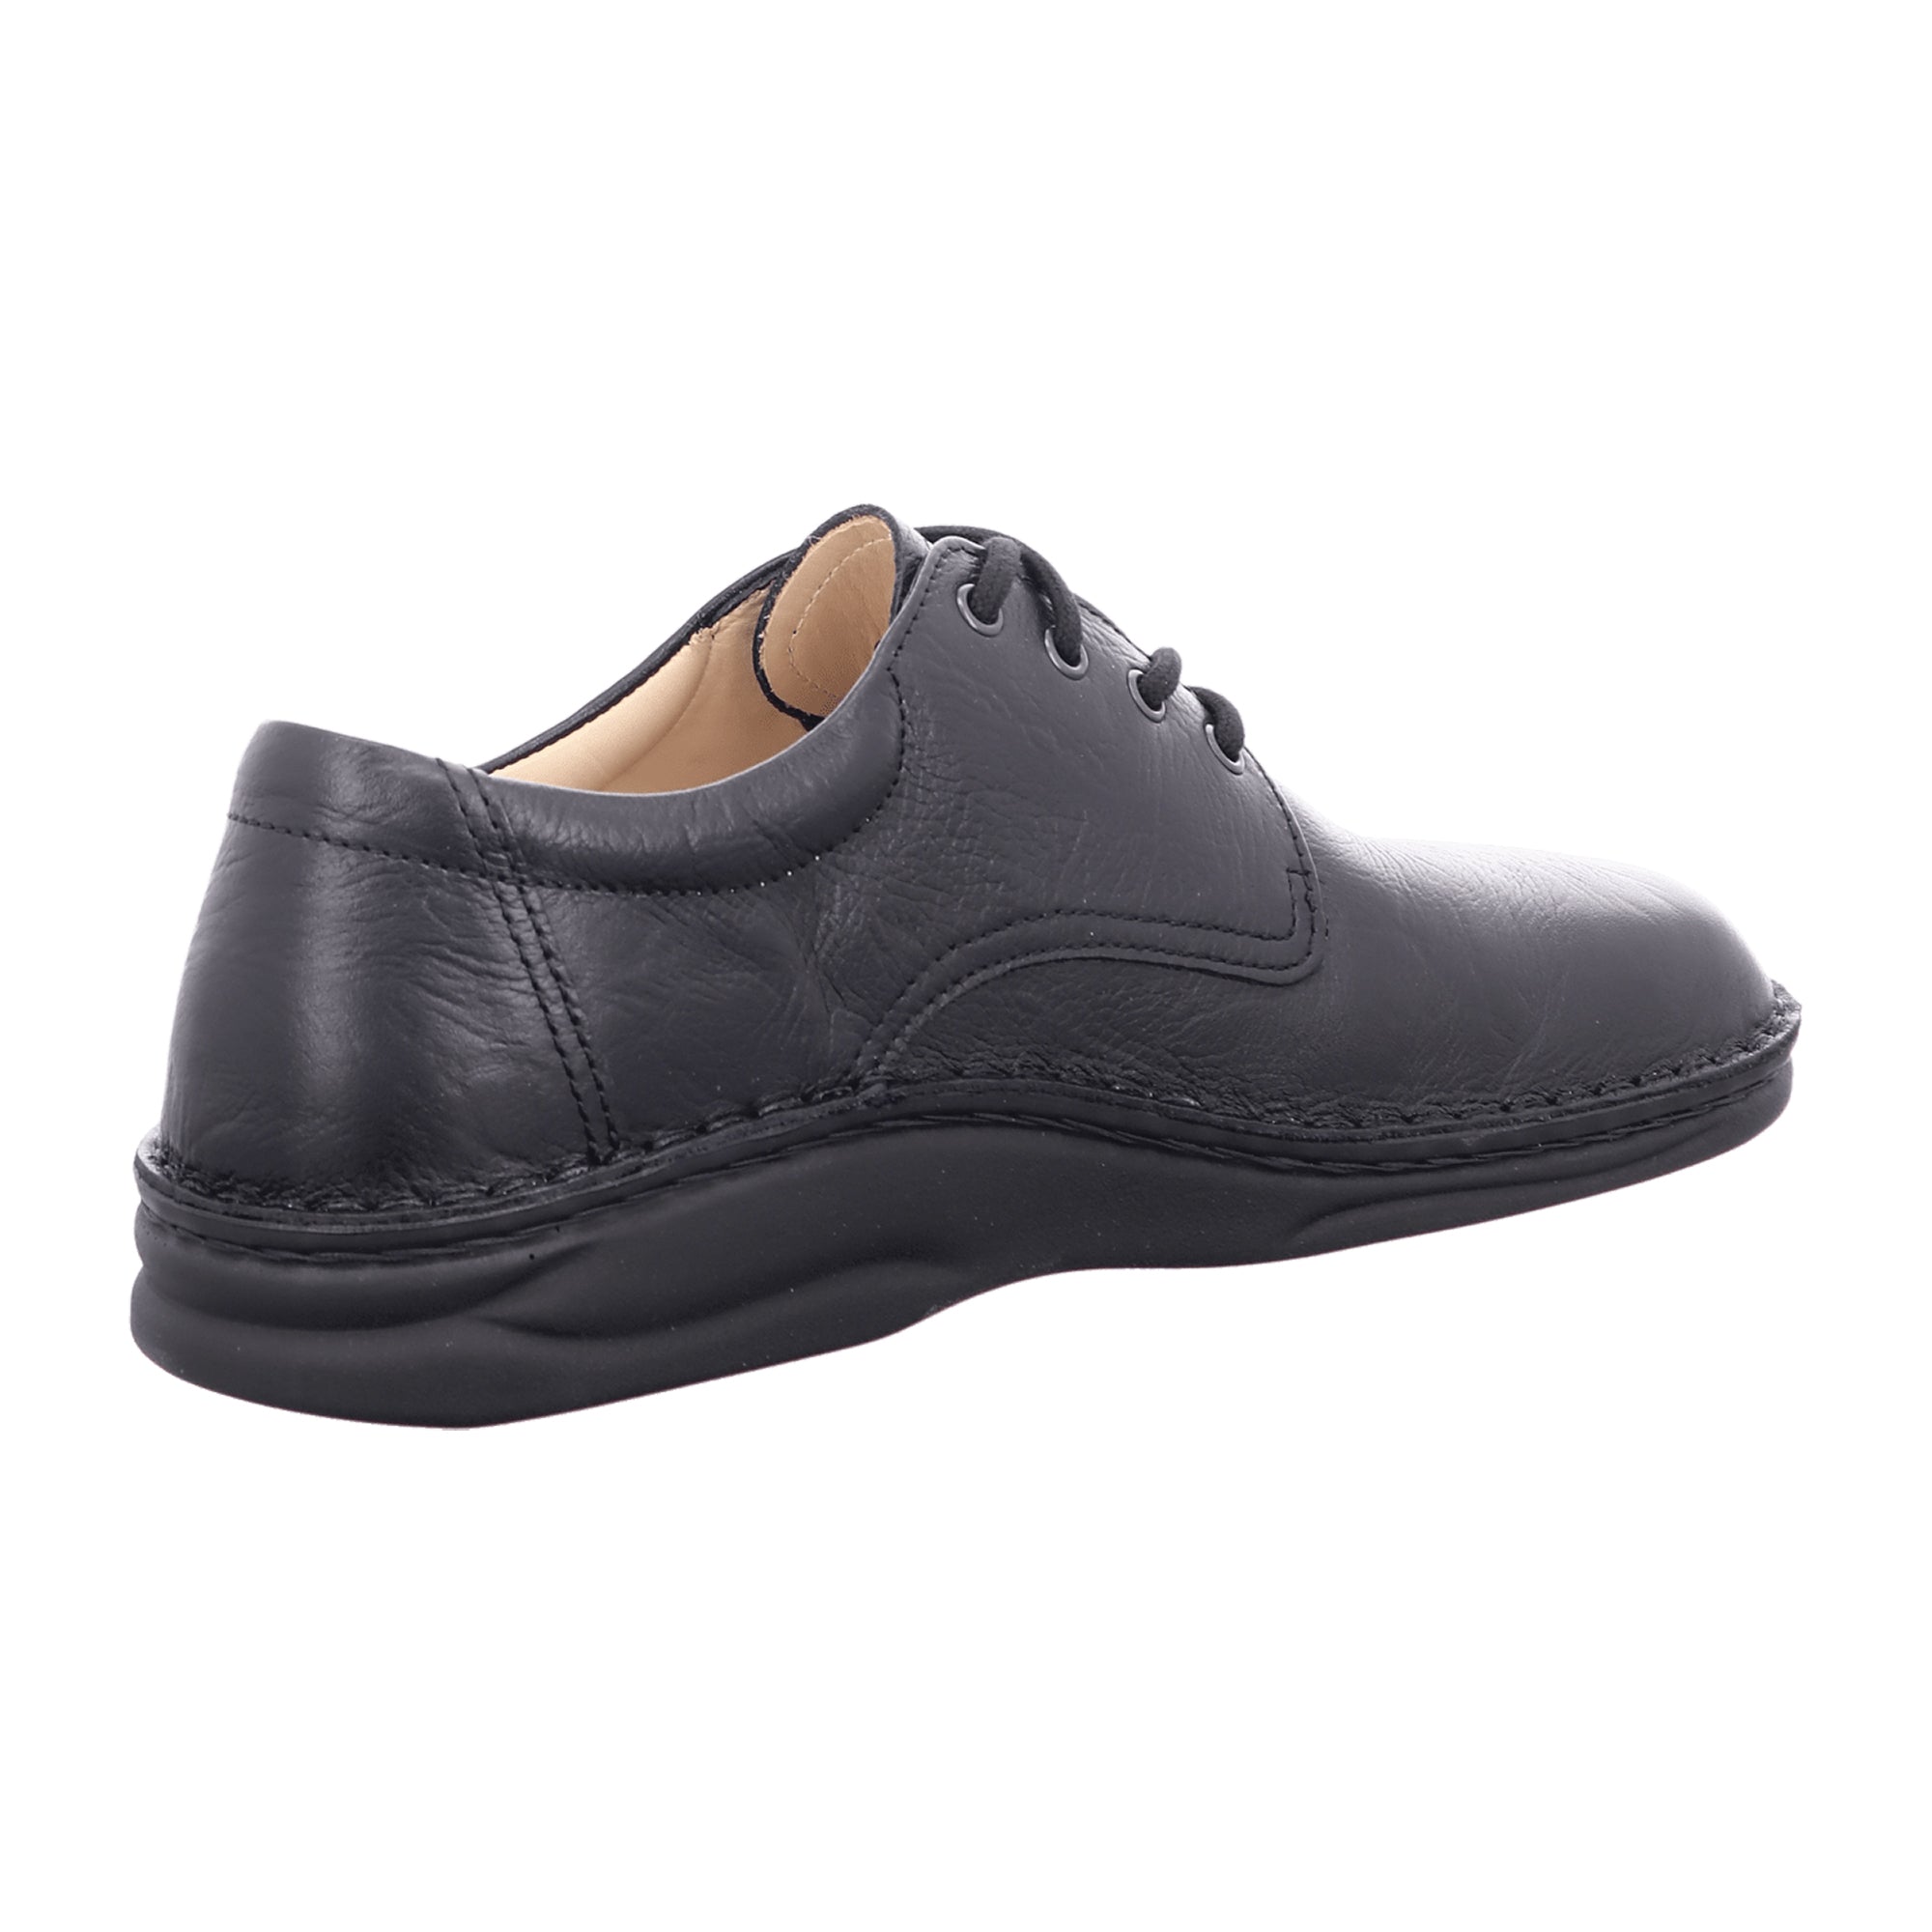 Finn Comfort Metz Men's Black Comfort Shoes - Optimal Stability & Shock Absorption